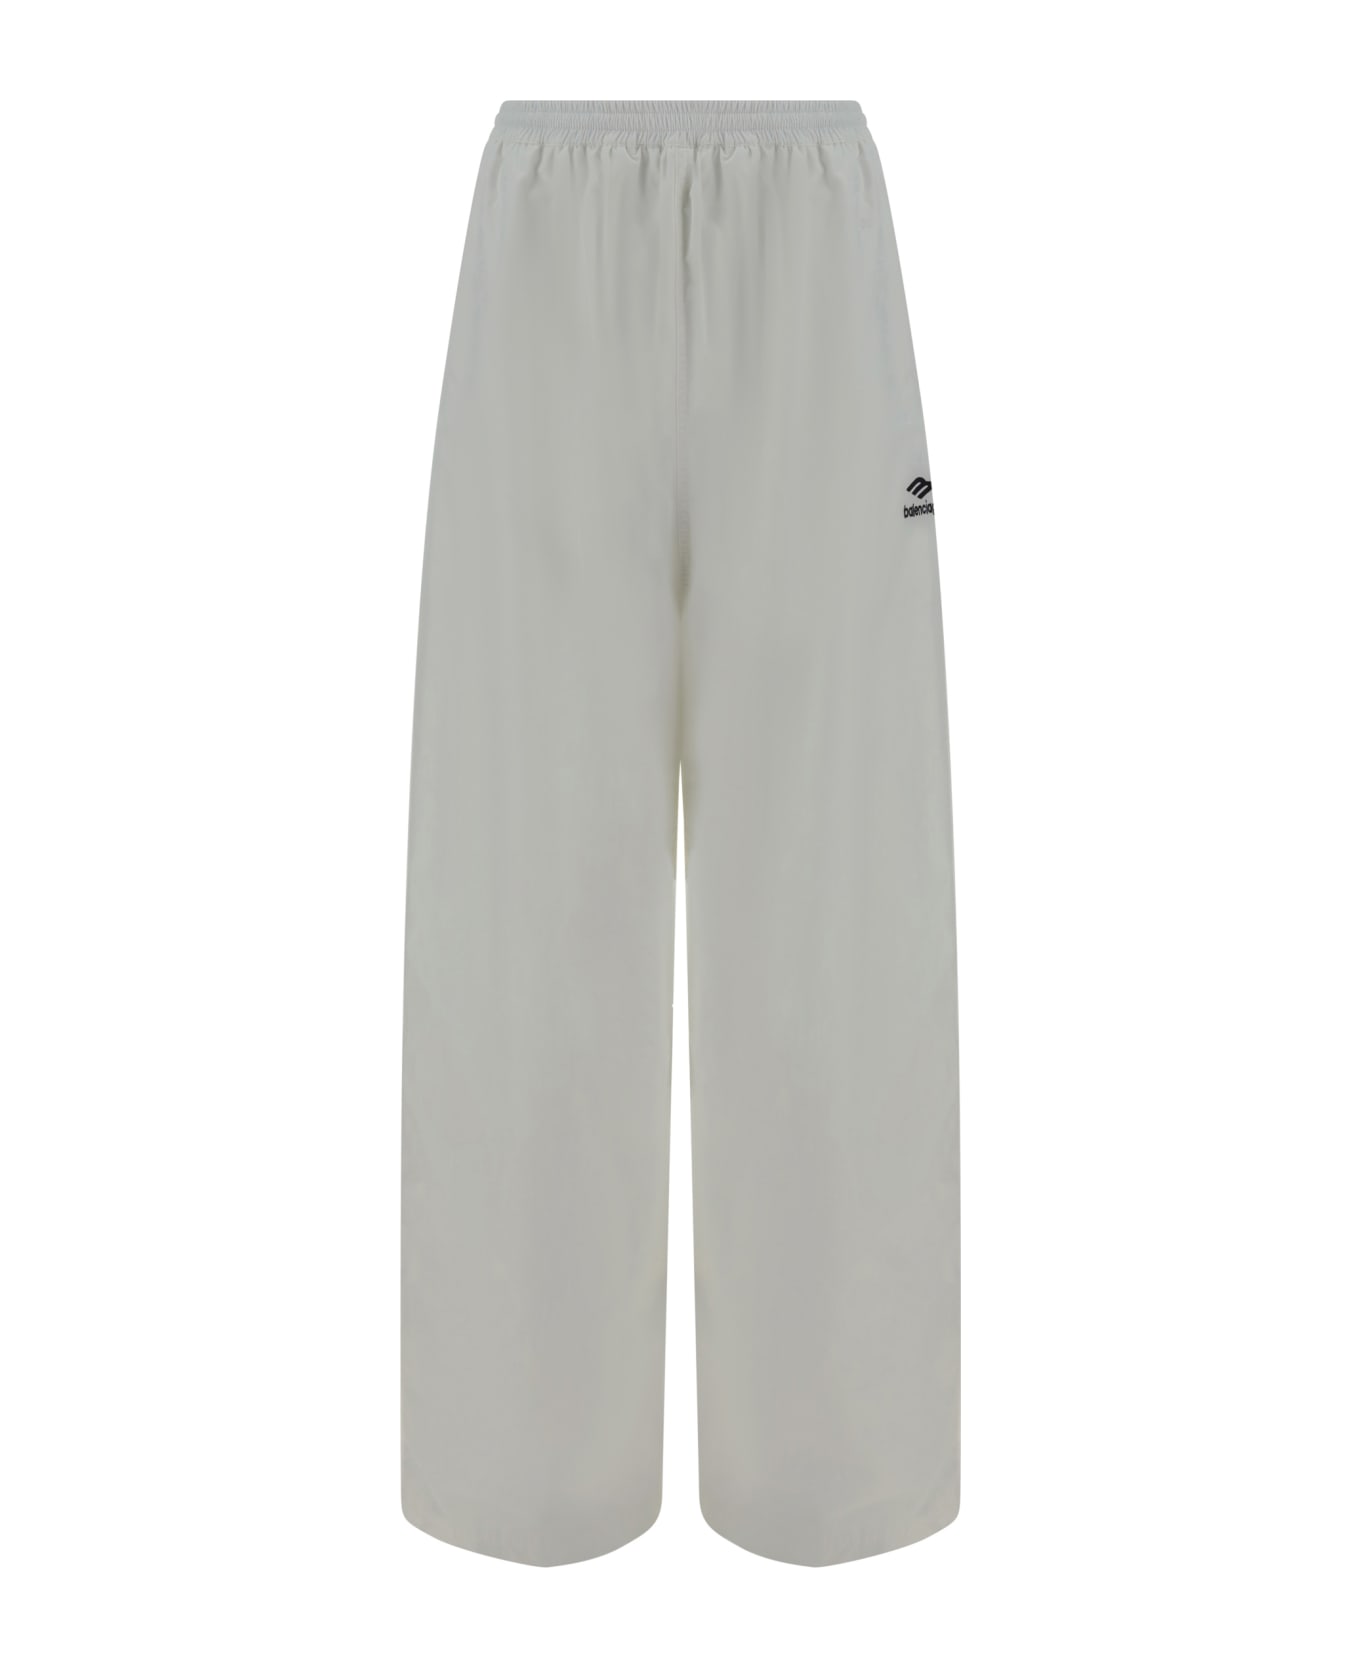 Balenciaga Sweatpants - White